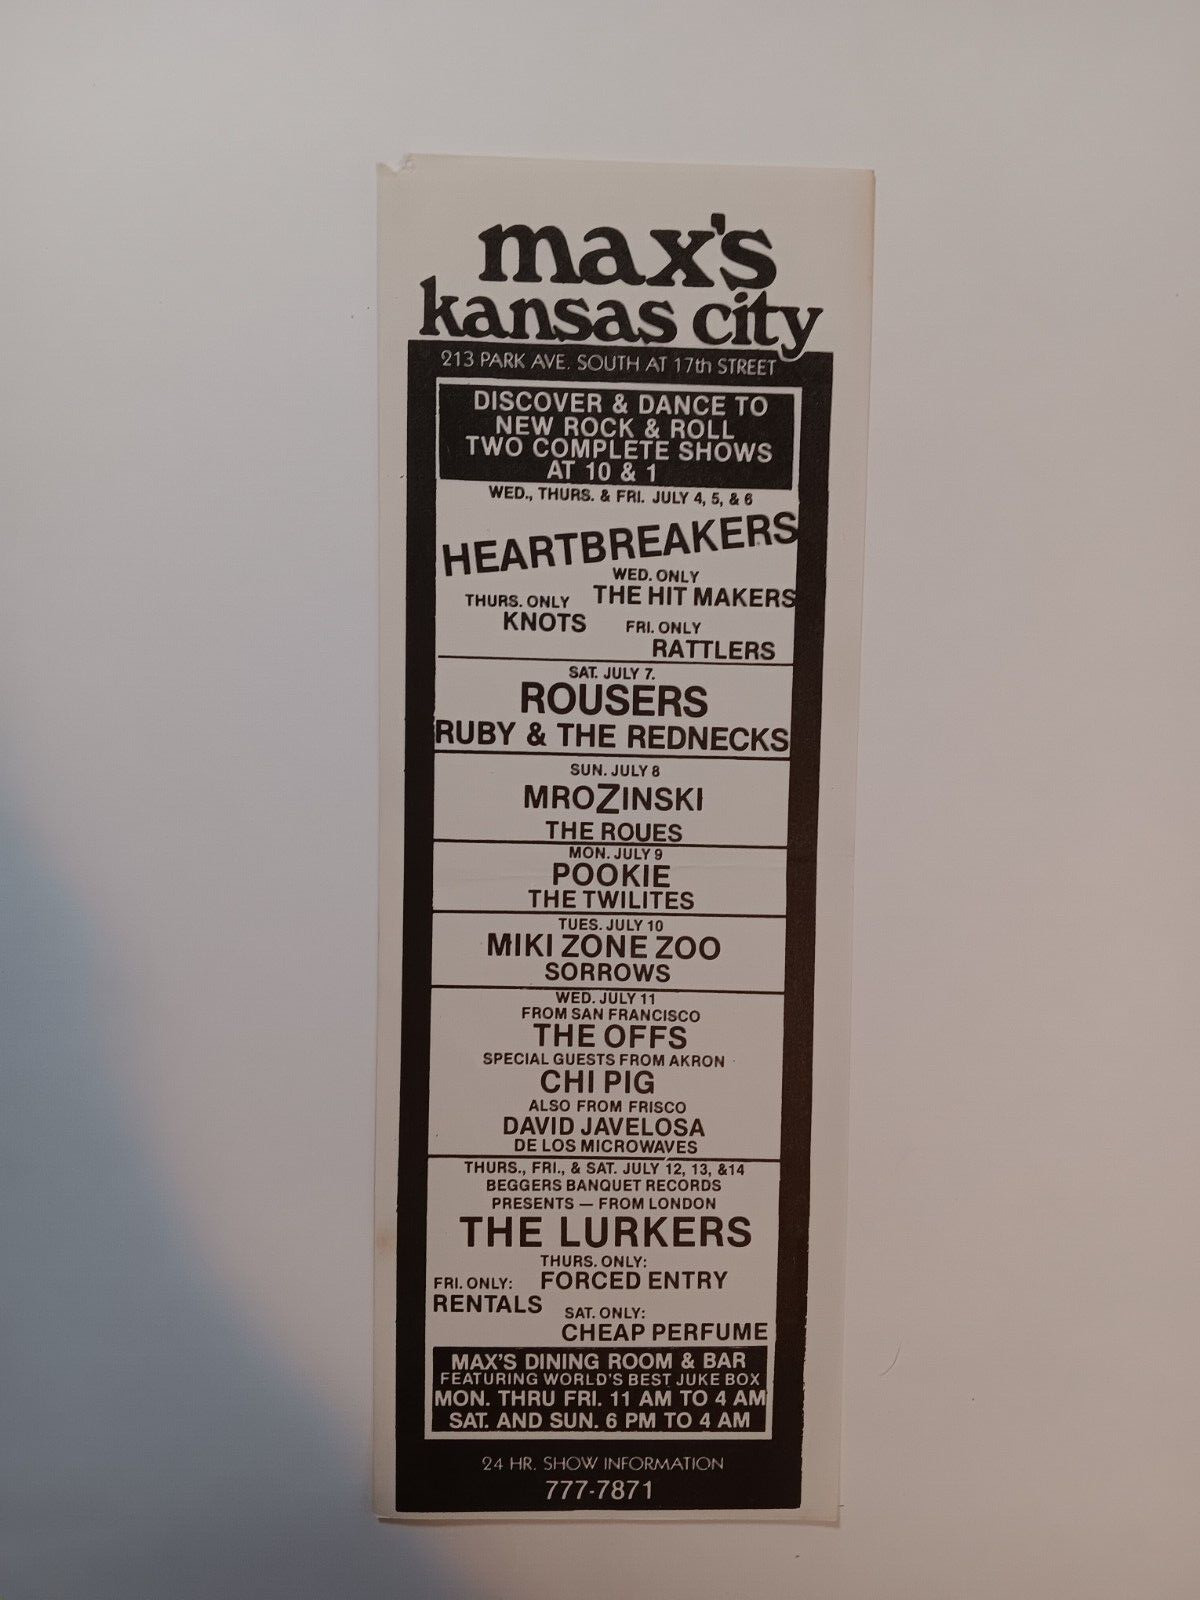 Max's Kansas City circular ad from the 70s original item